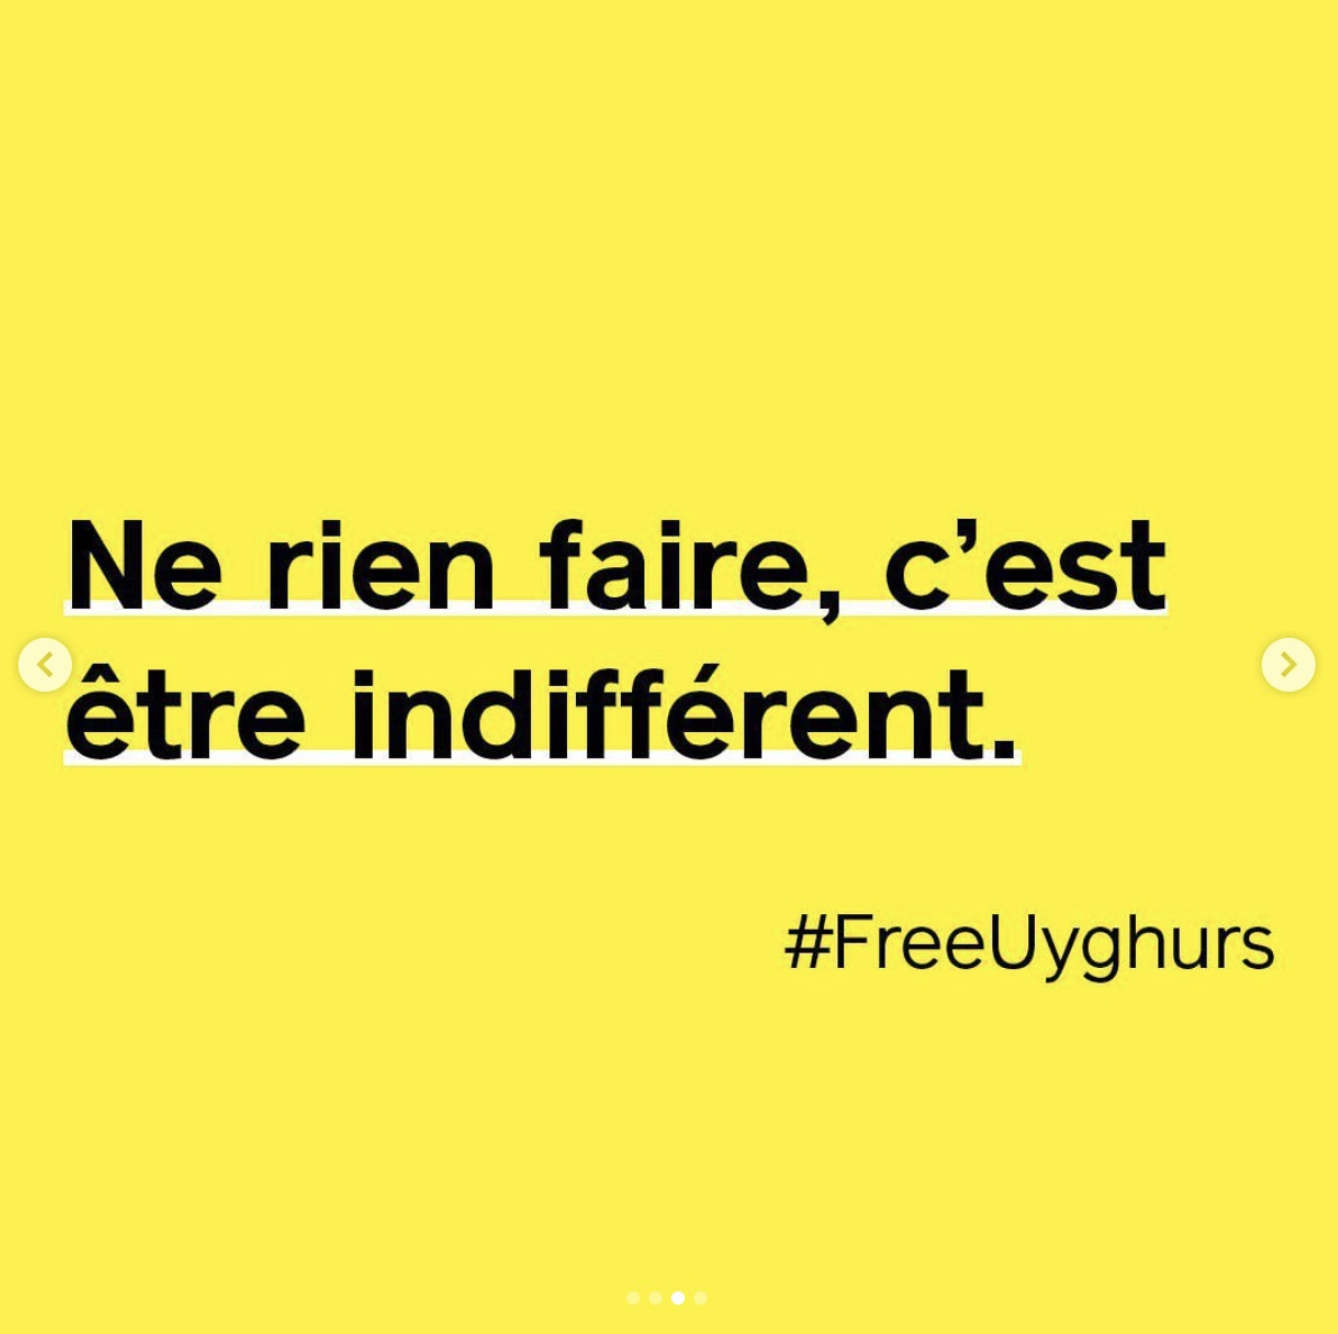 #freeuyghurs